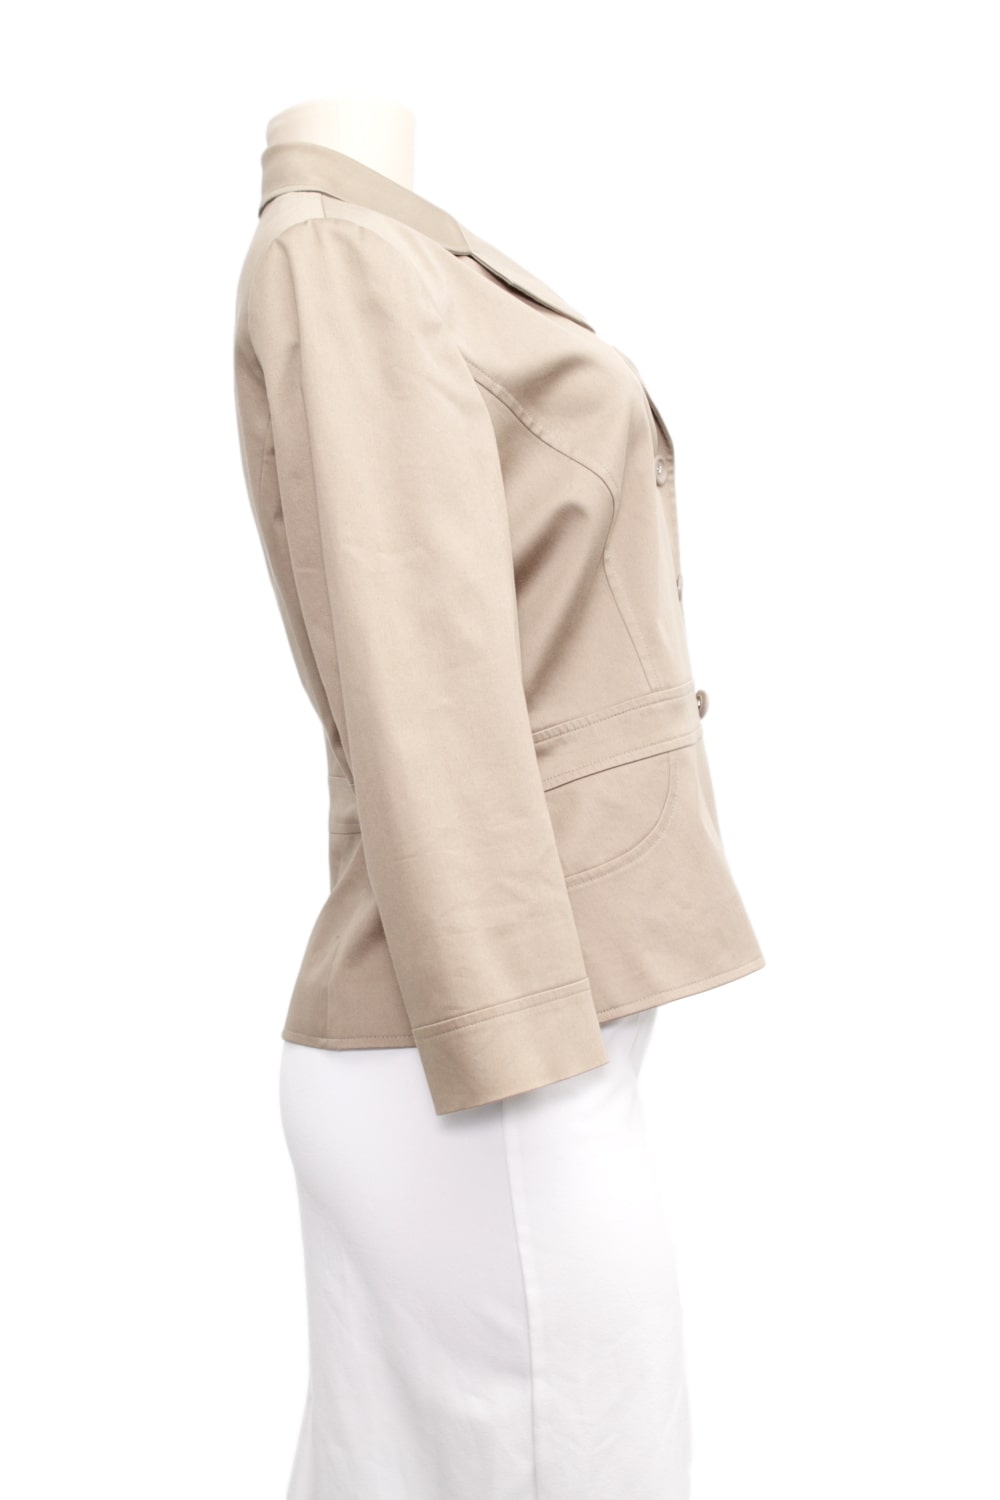 Tahari Lightweight Jacket -Right Side- eKlozet Luxury Consignment